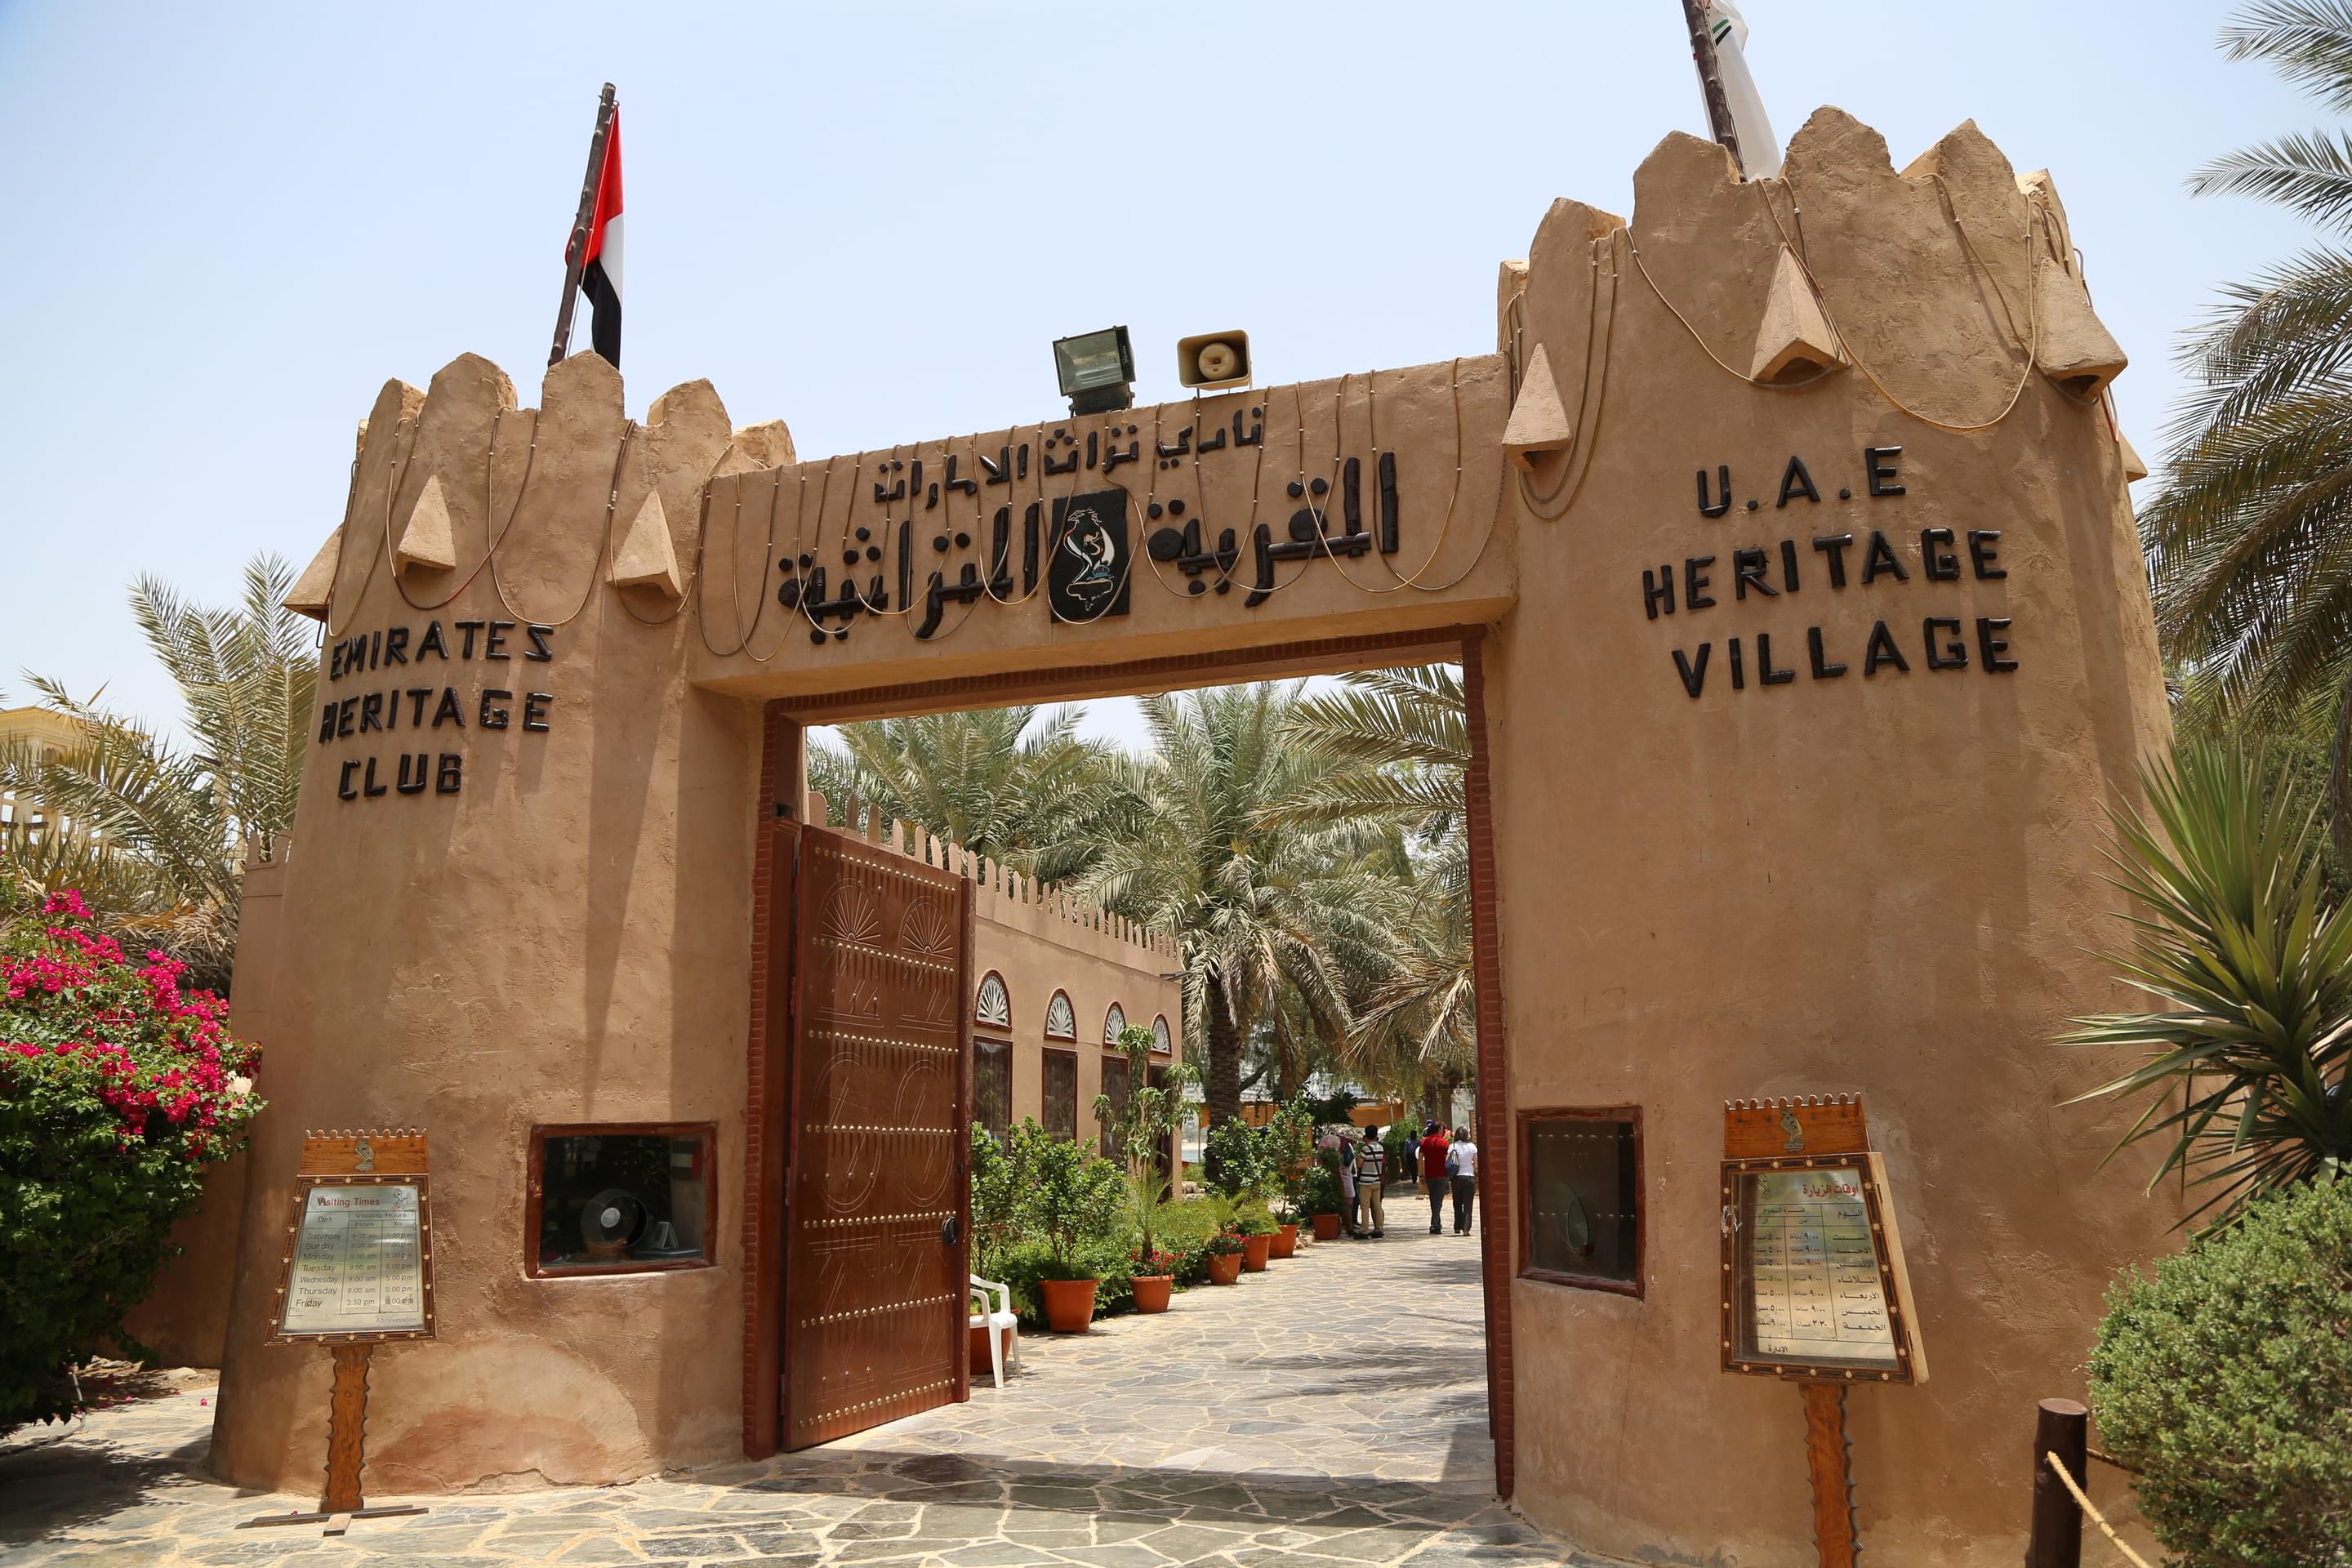 Heritage Village Overview